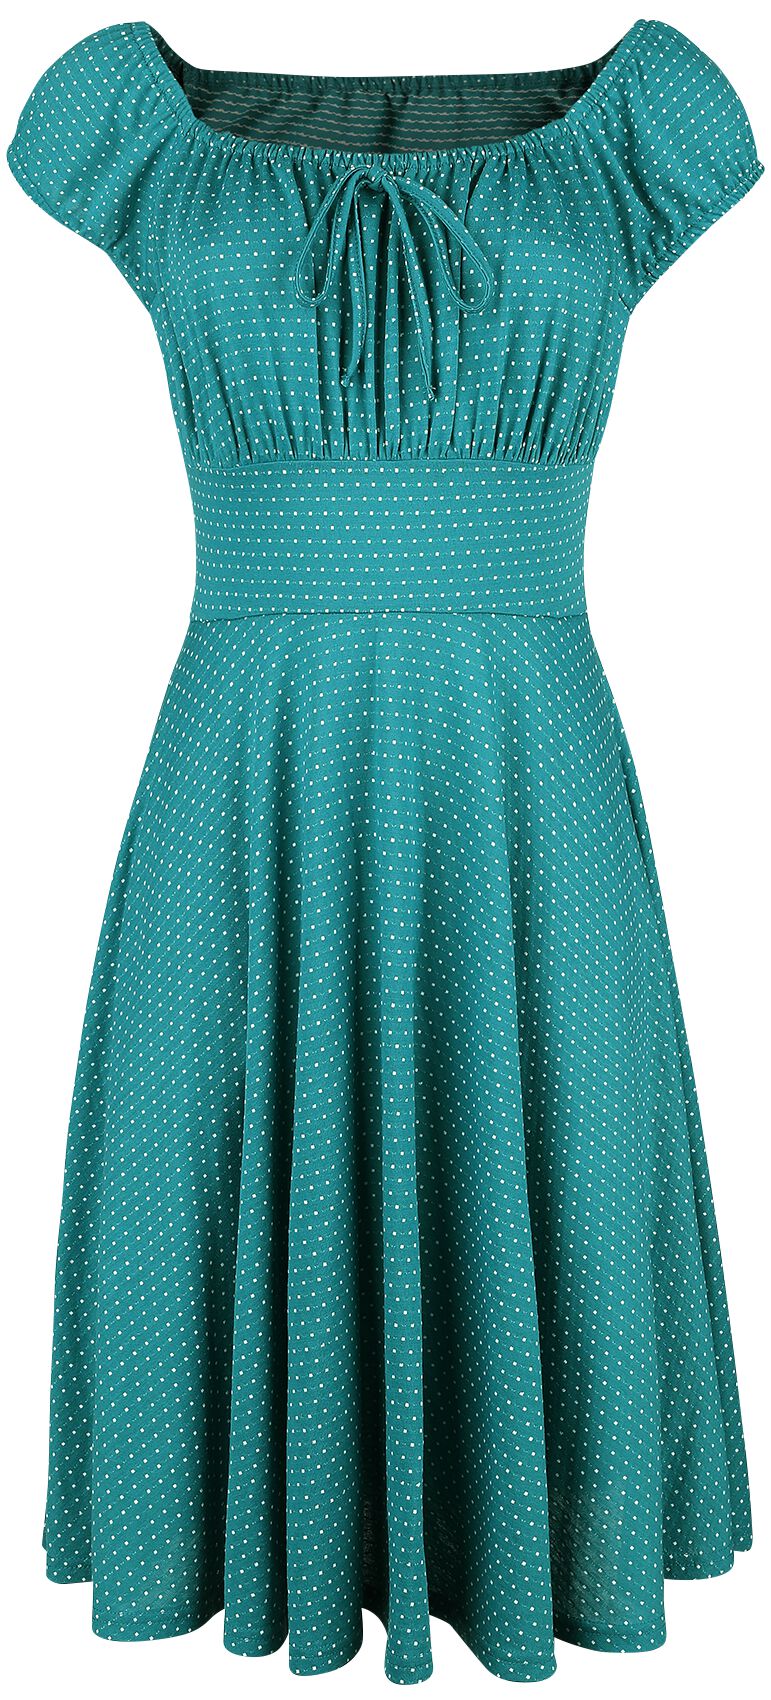 Voodoo Vixen - Rockabilly Kleid knielang - Tessy Green Gathered Dress - XS bis 4XL - für Damen - Größe L - petrol